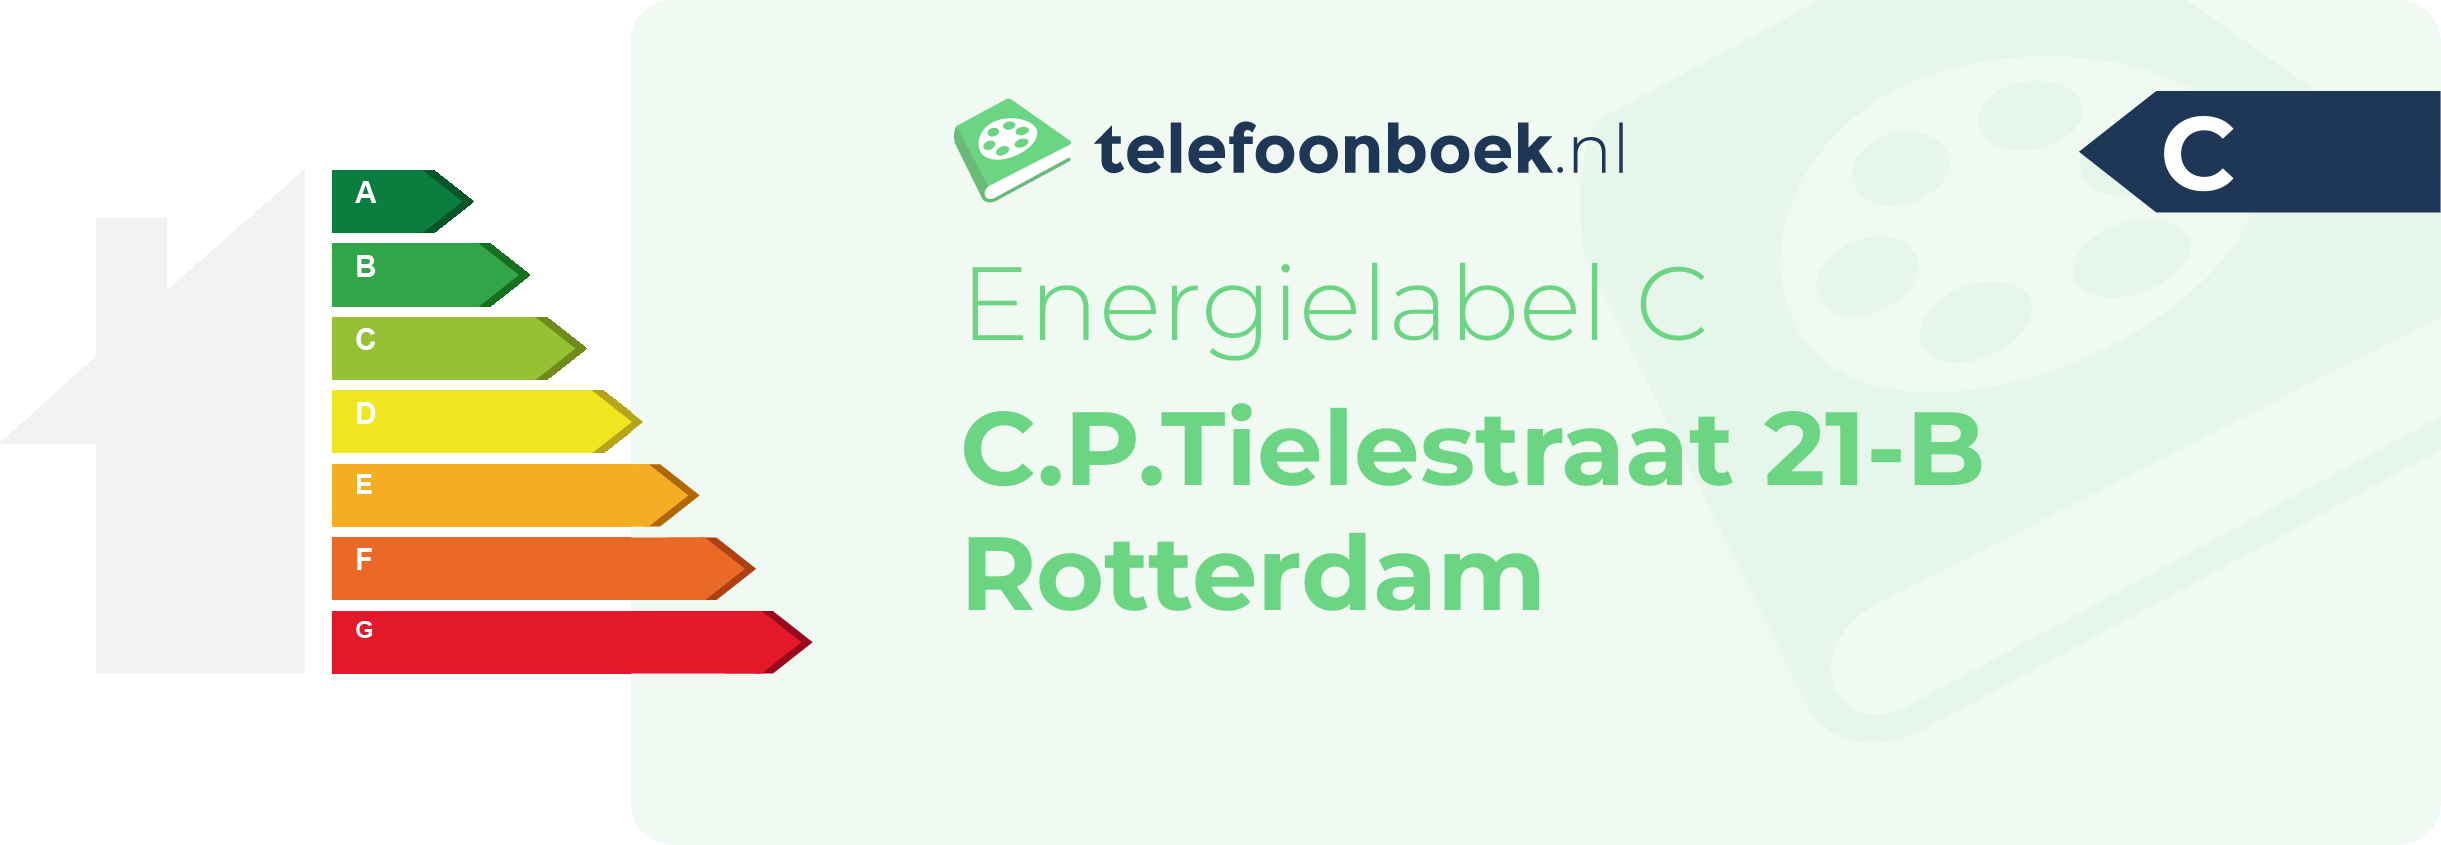 Energielabel C.P.Tielestraat 21-B Rotterdam